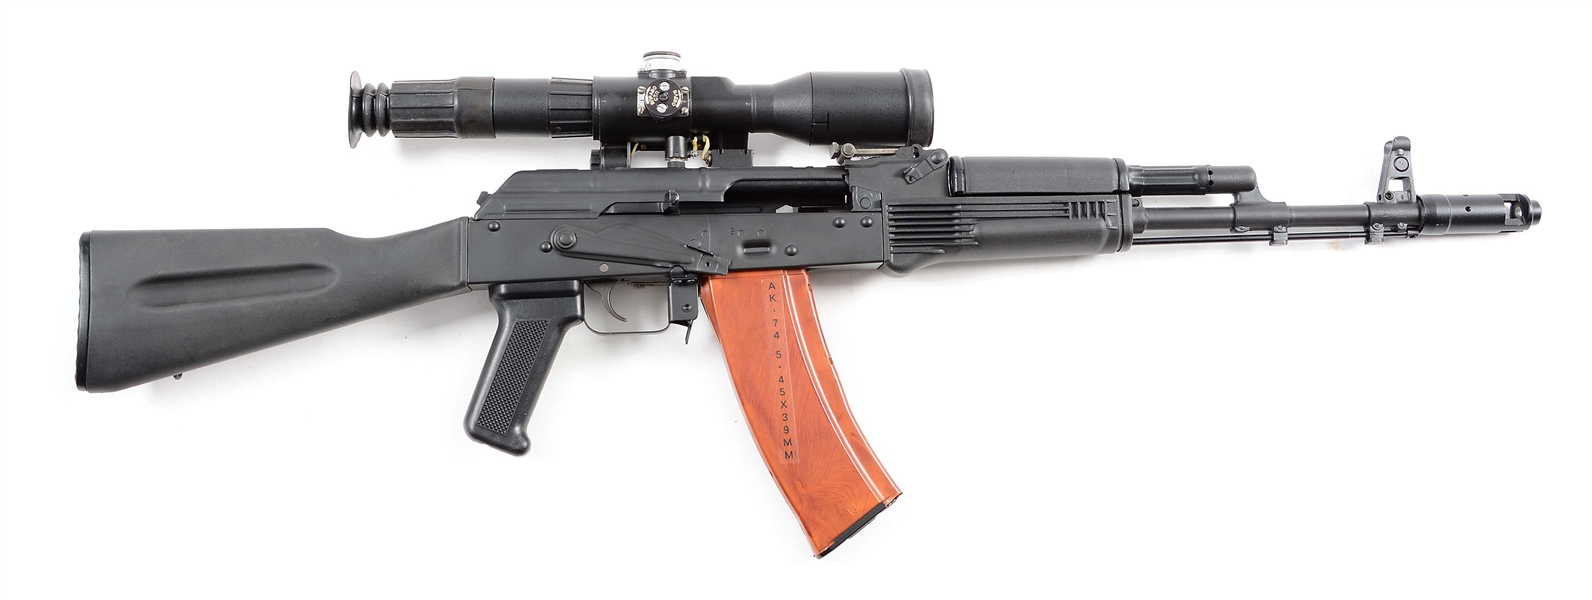 (M) SCOPED ITM ARMS AK-74 SEMI-AUTOMATIC RIFLE.